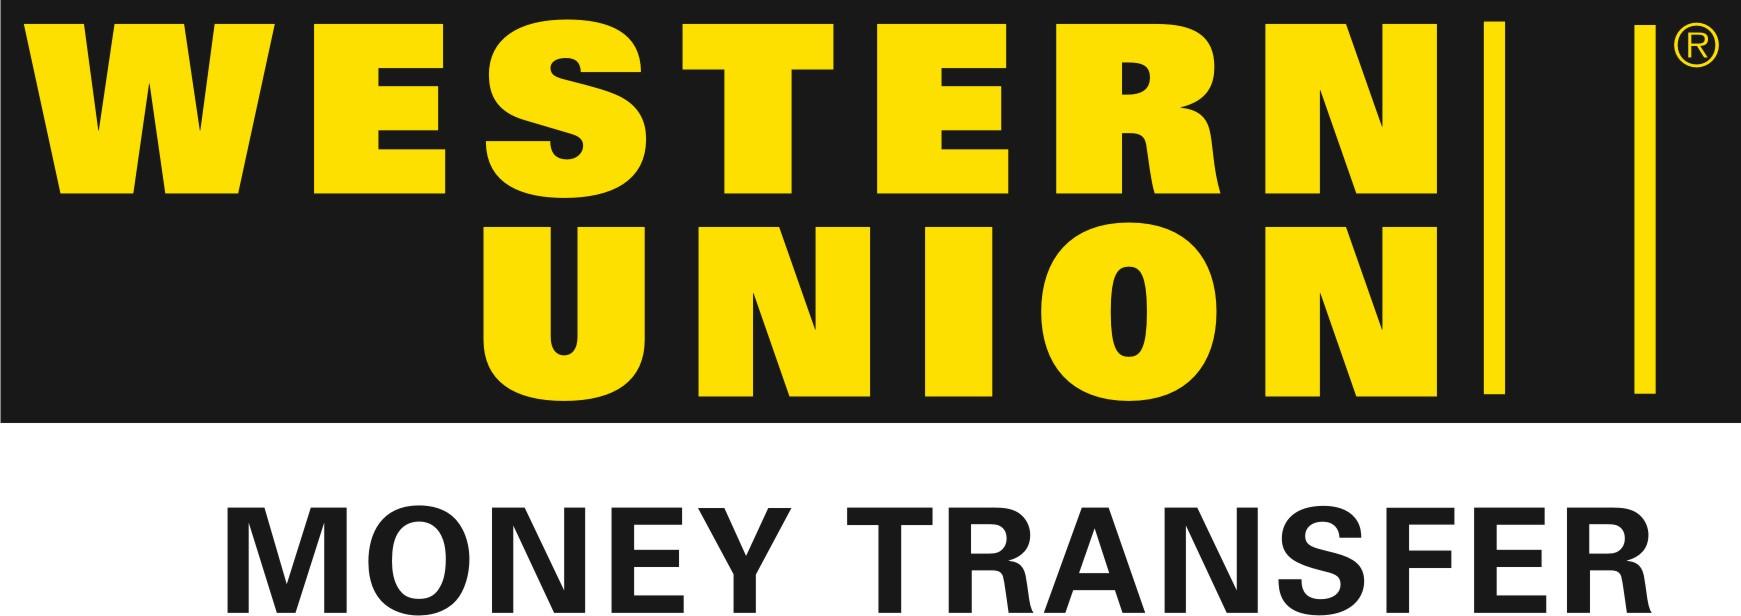 Western Union Alternative